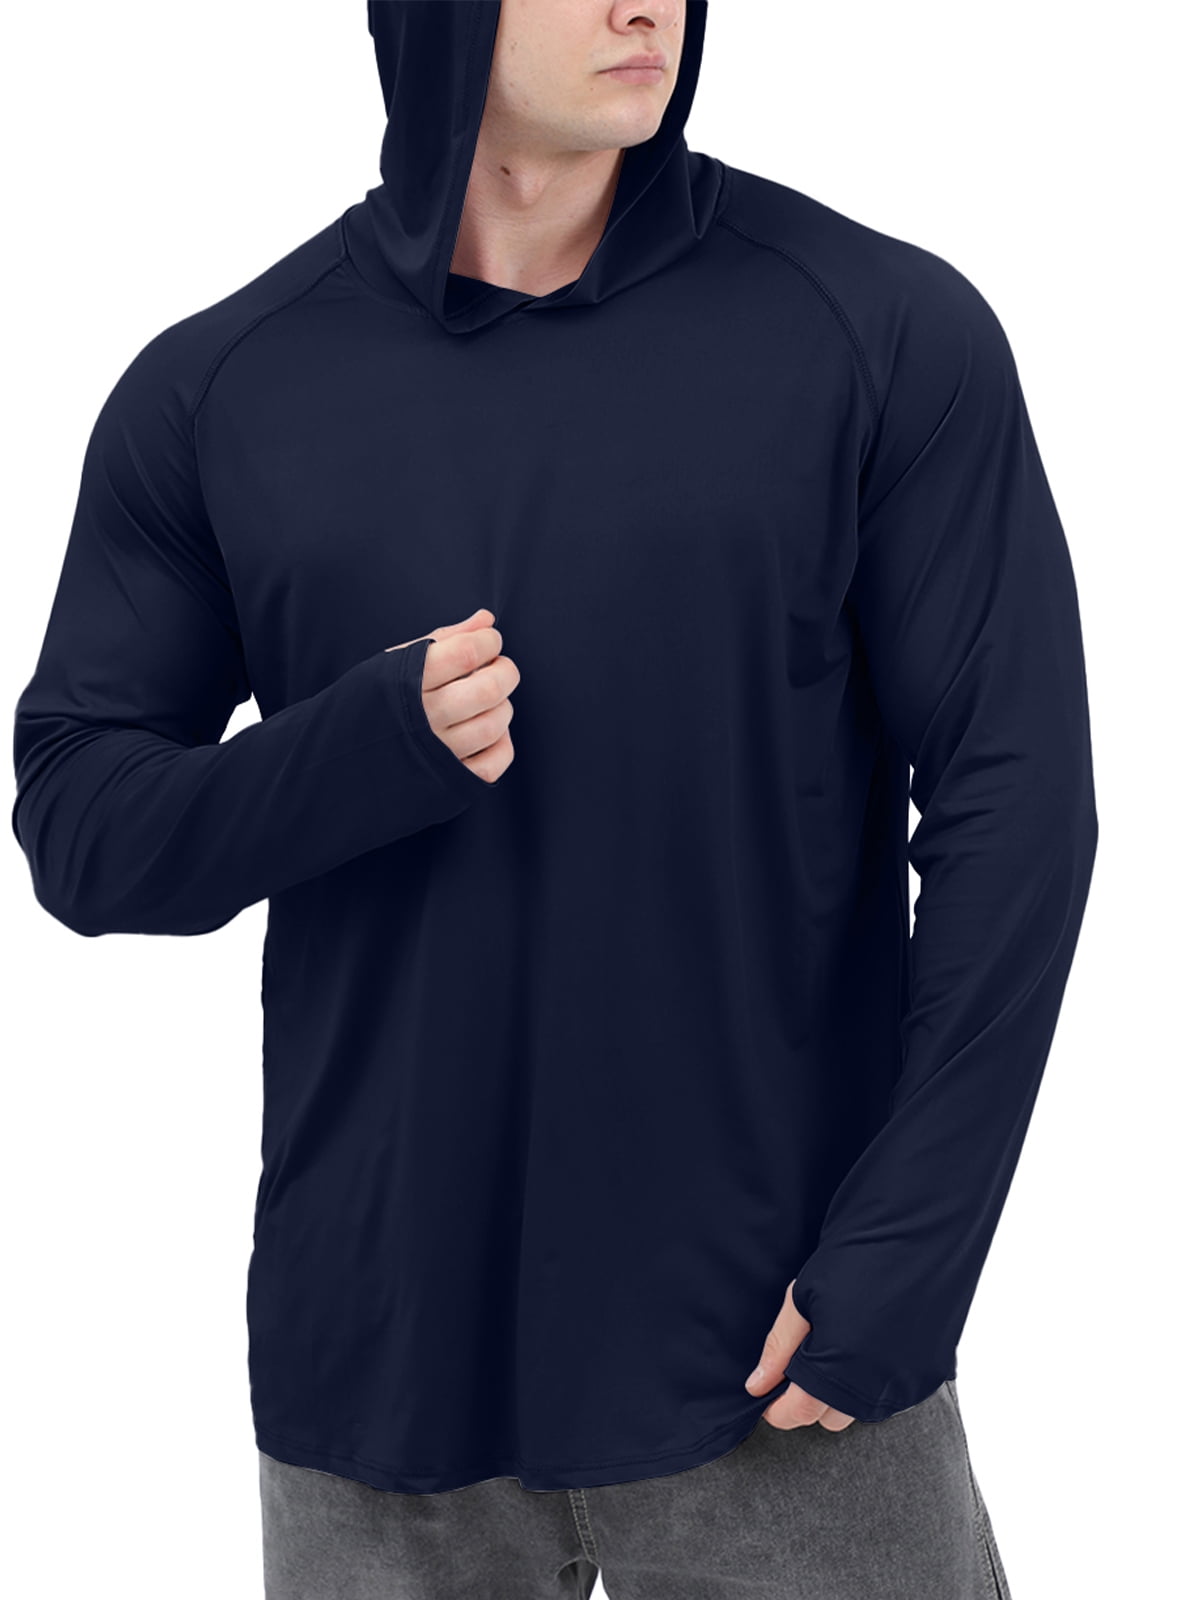 Uv Protection Clothing Hood Shirts